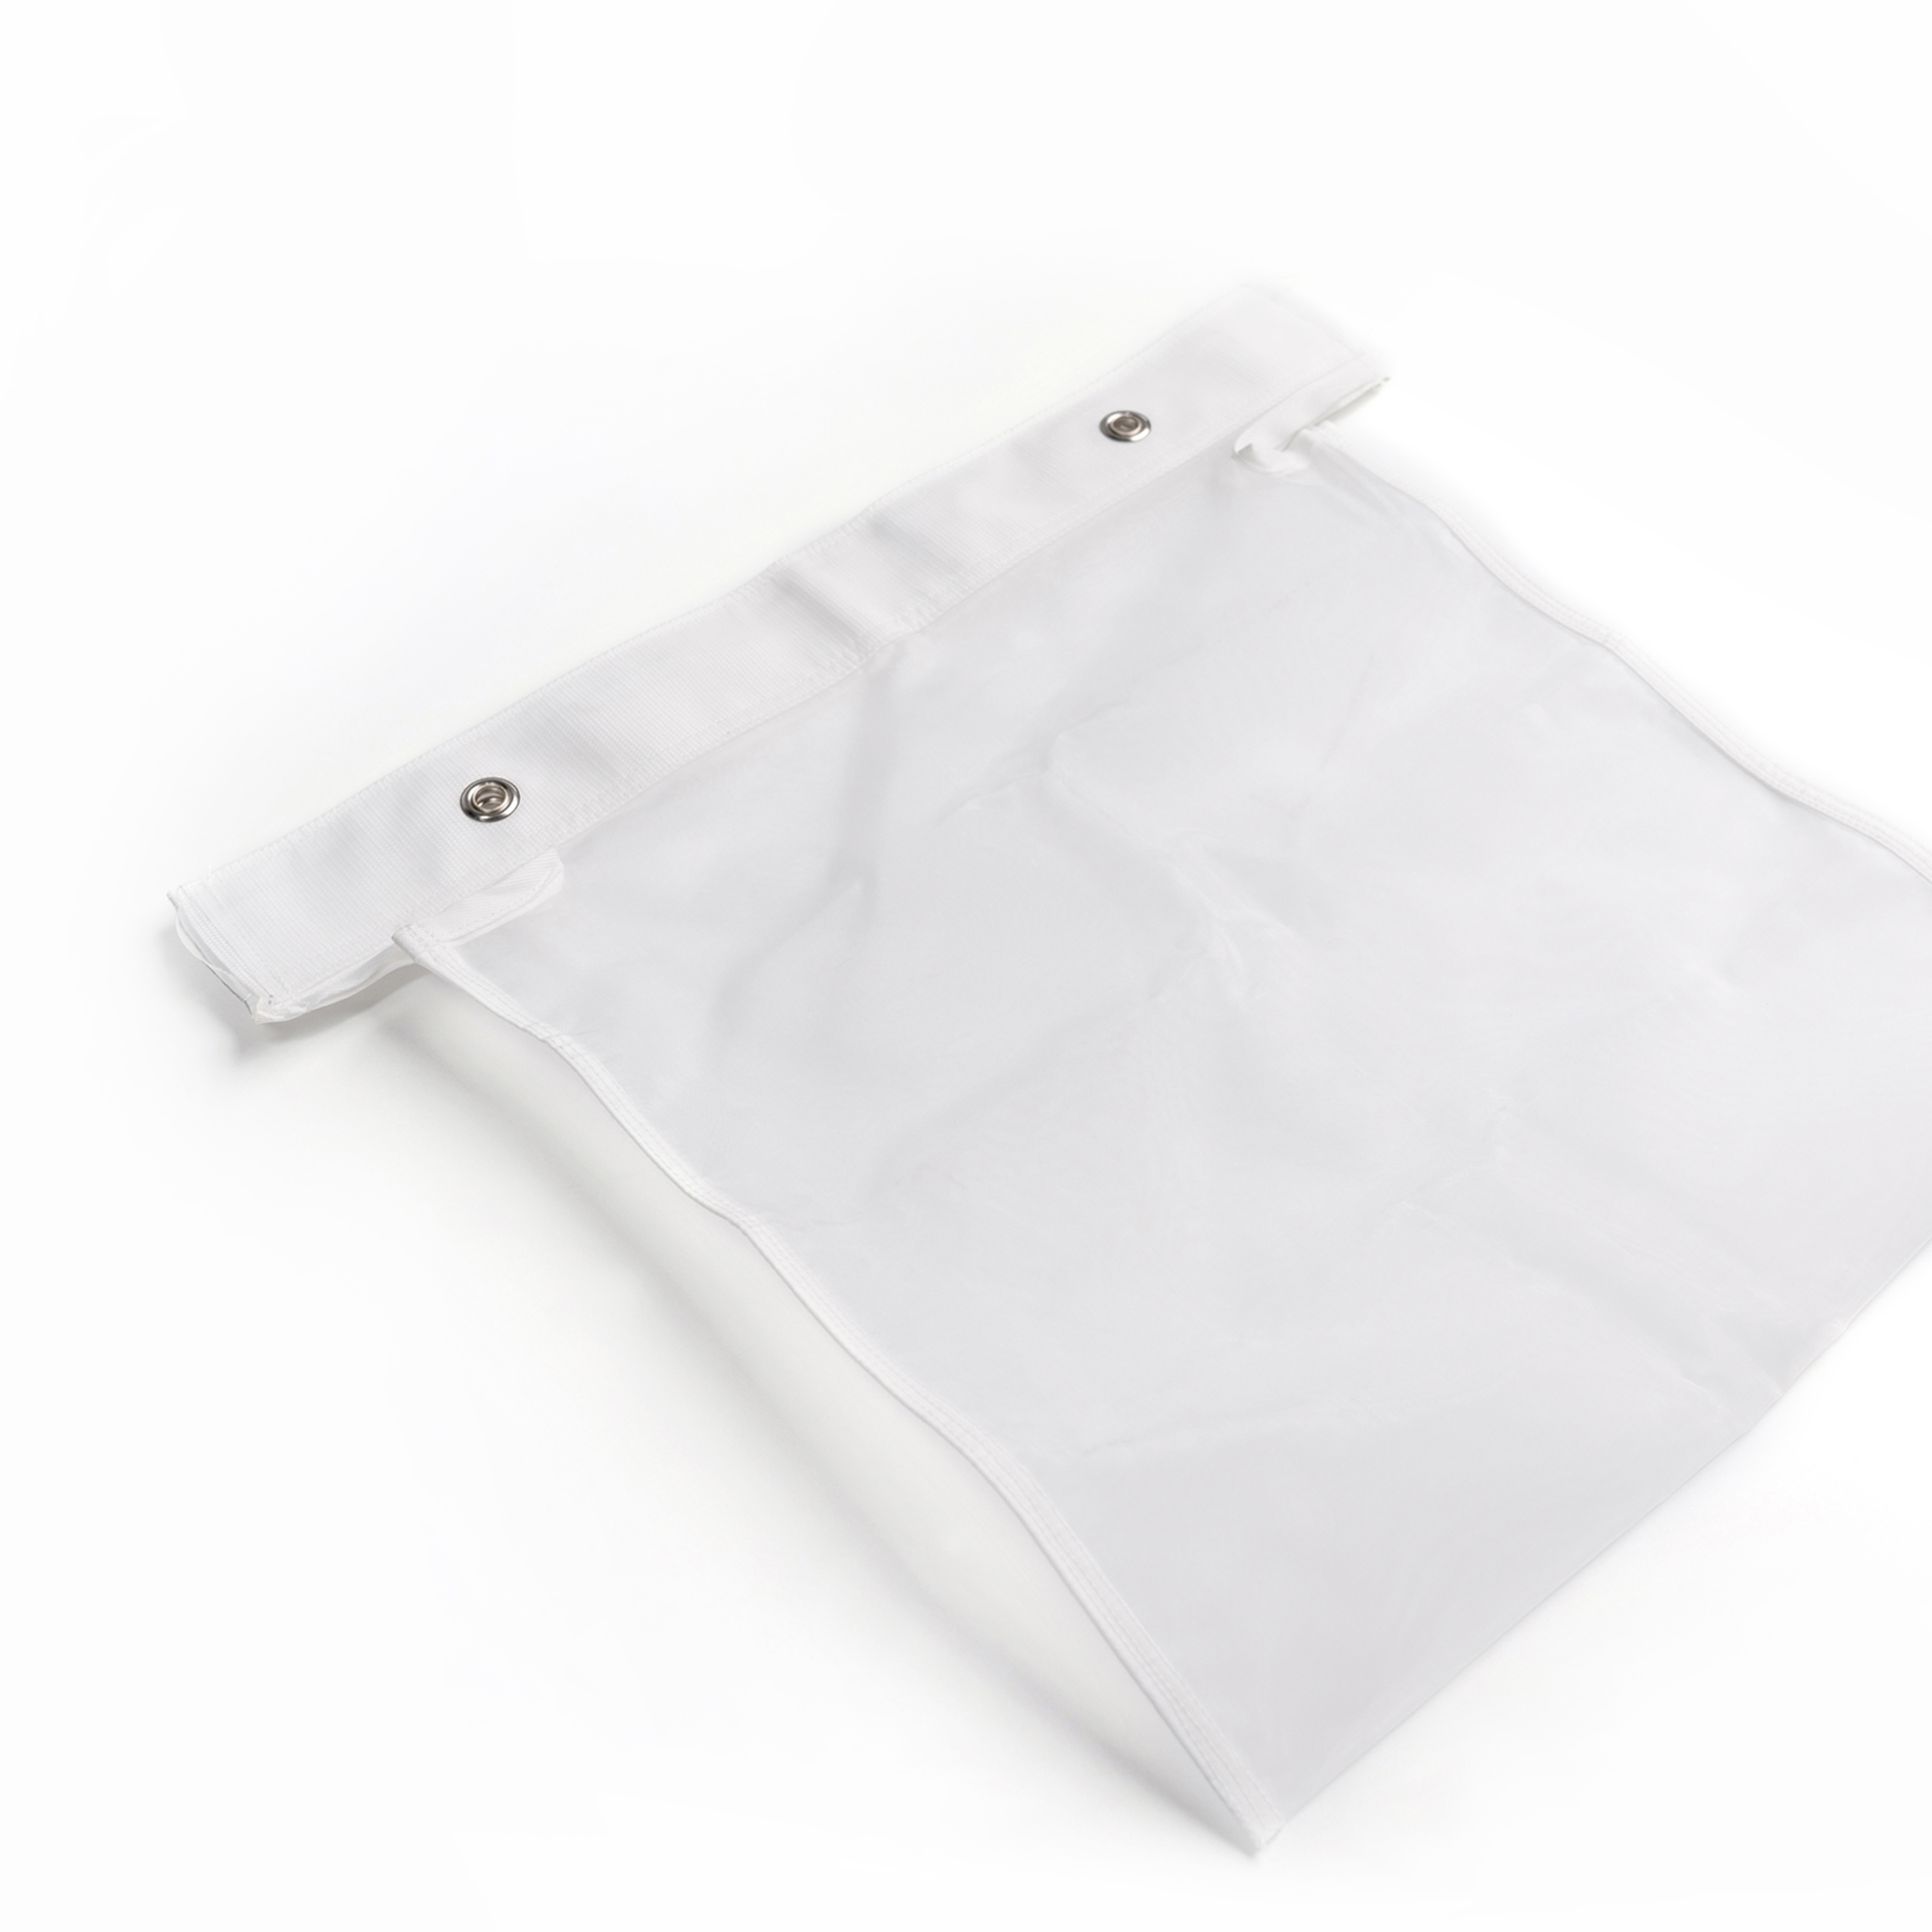 X-1 Press Bag - Monofilament "Nut Milk Bag" - 5 Pack